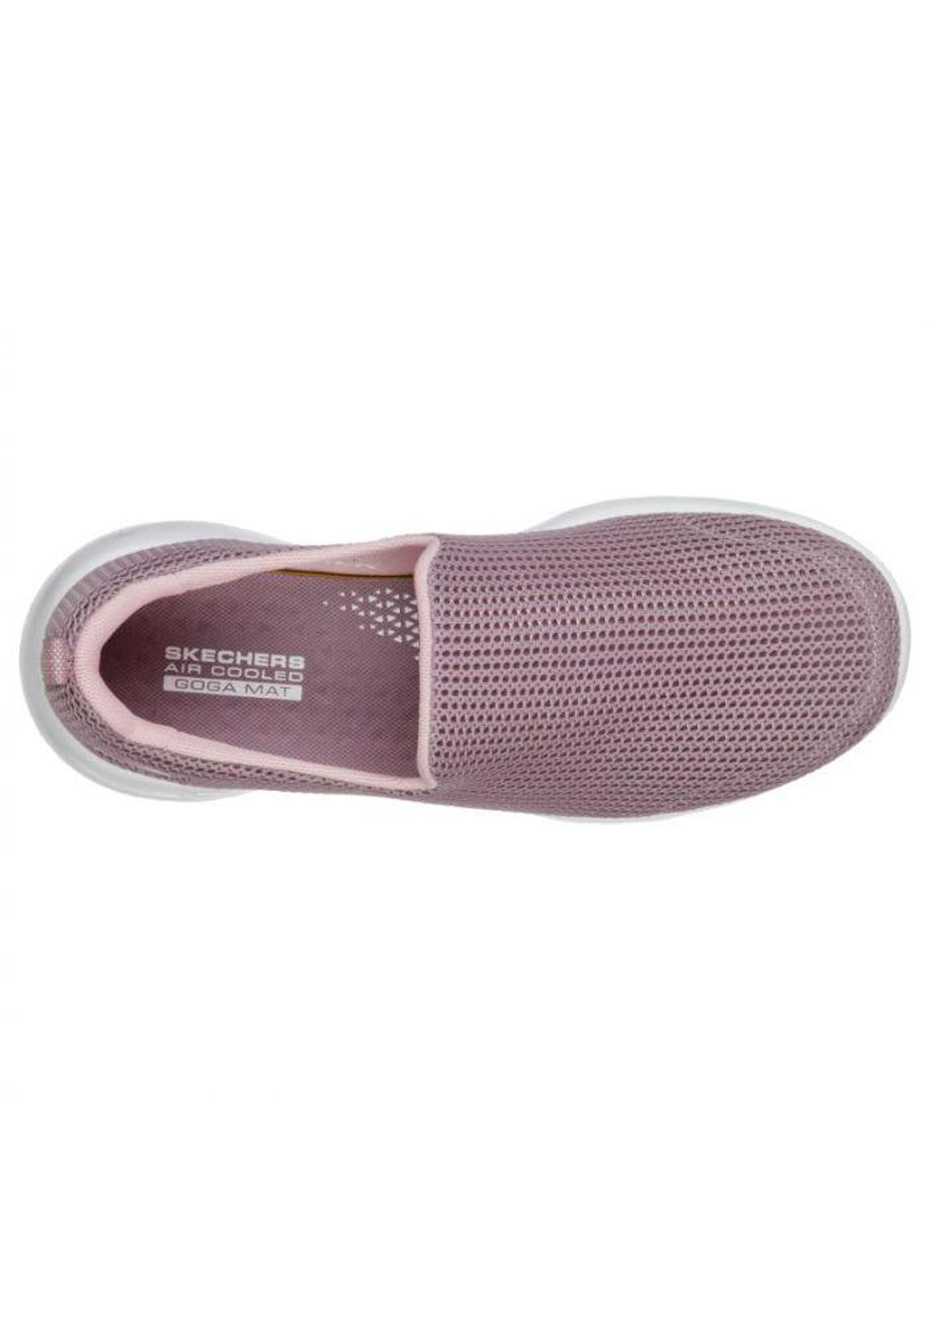 skechers air cooled goga mat shoes